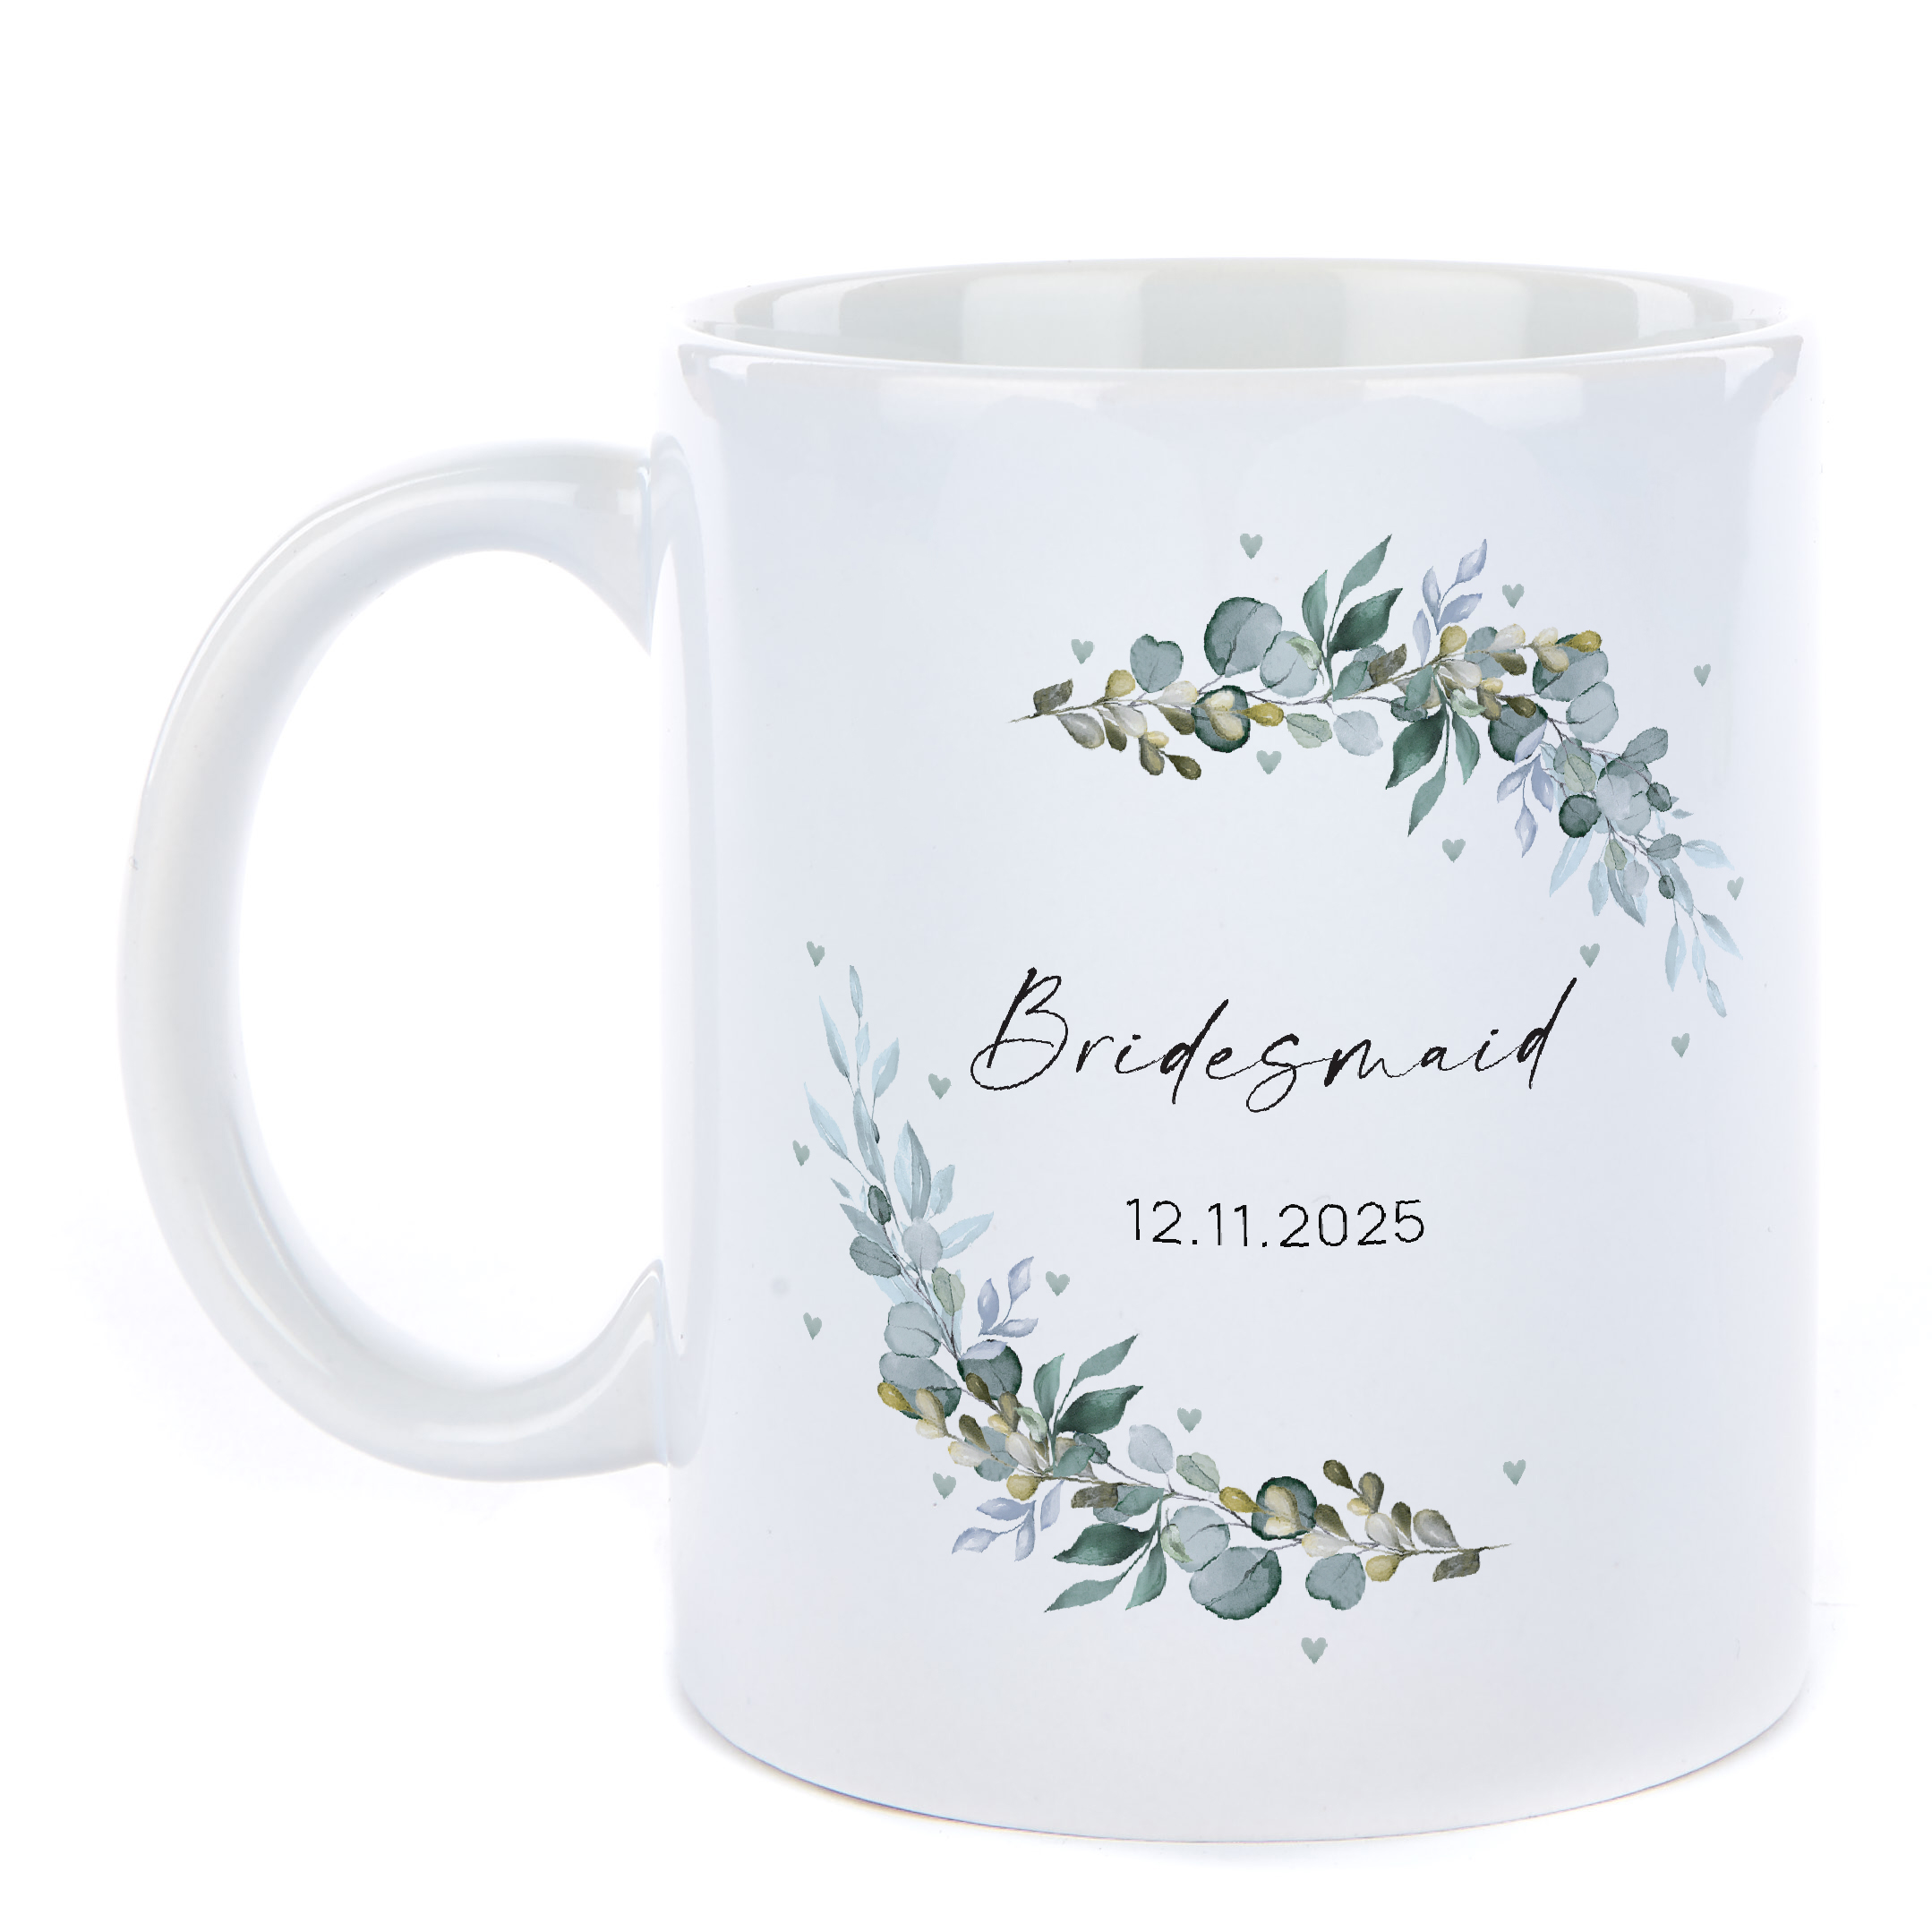 Personalised Mug - Bridesmaid